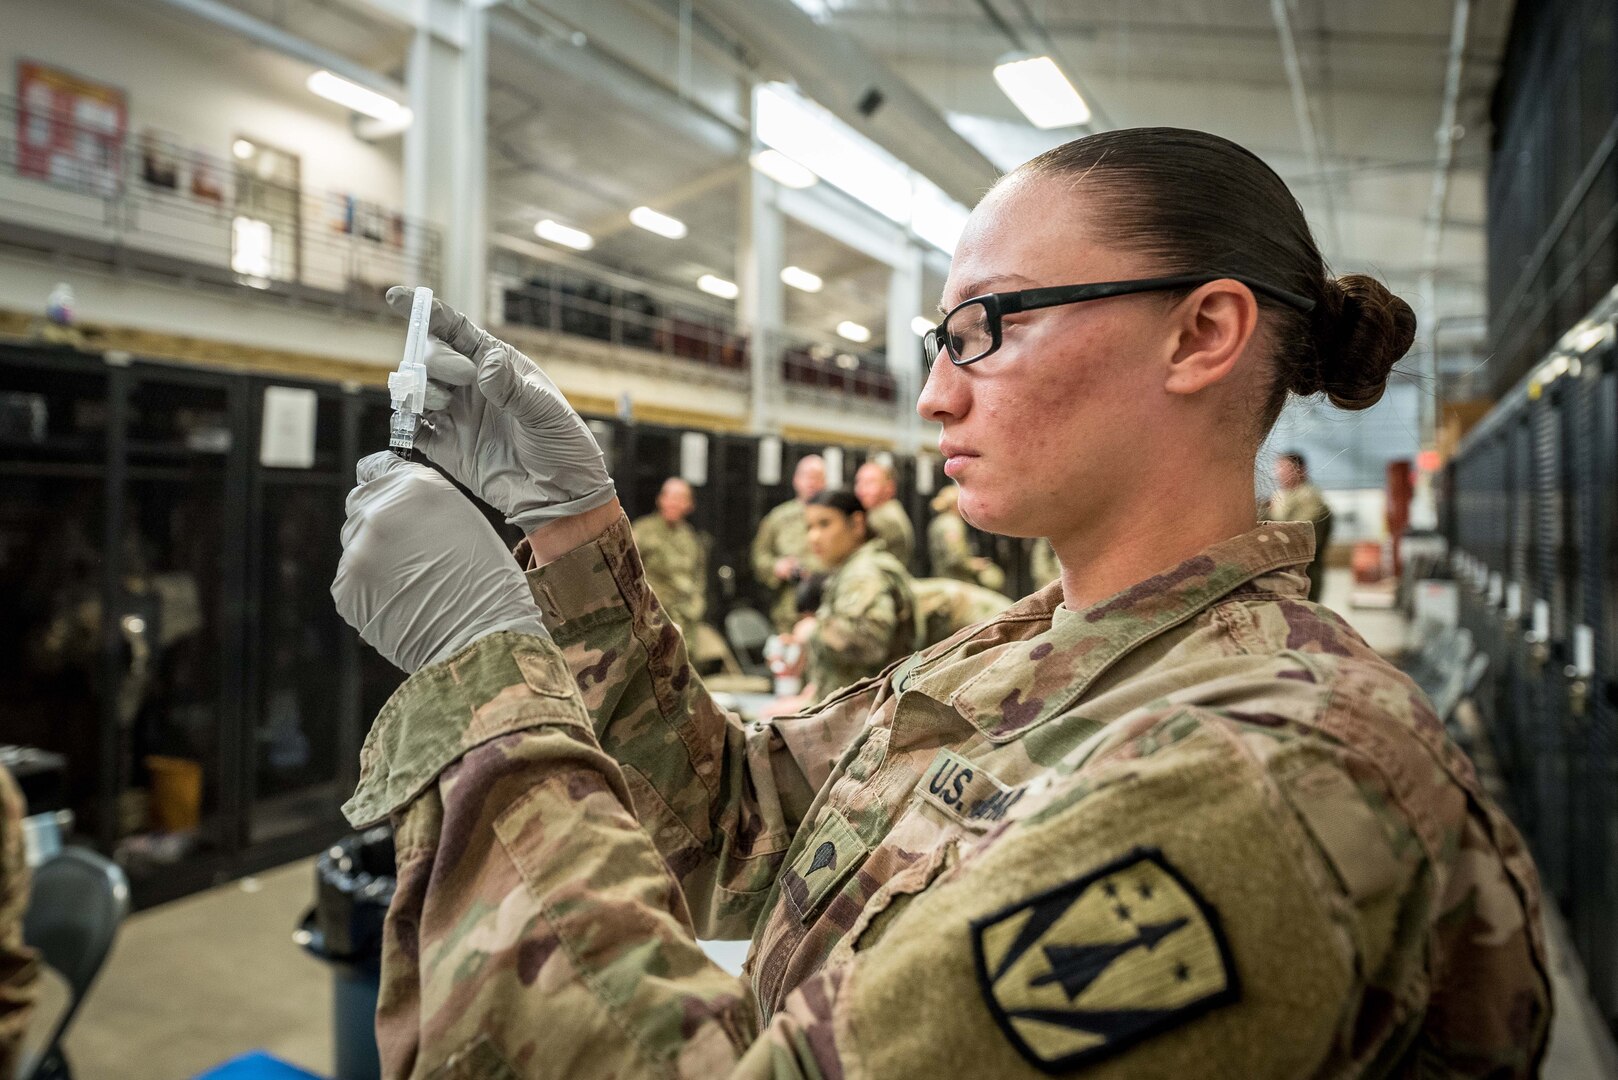 Spc. Selena M. Castillo prepares to administer a flu vaccination on Fort Sill, Oklahoma, Nov. 15, 2019. Castillo is a medic for 3rd Battalion, 2nd Air Defense Artillery Regiment, 31st Air Defense Artillery Brigade.